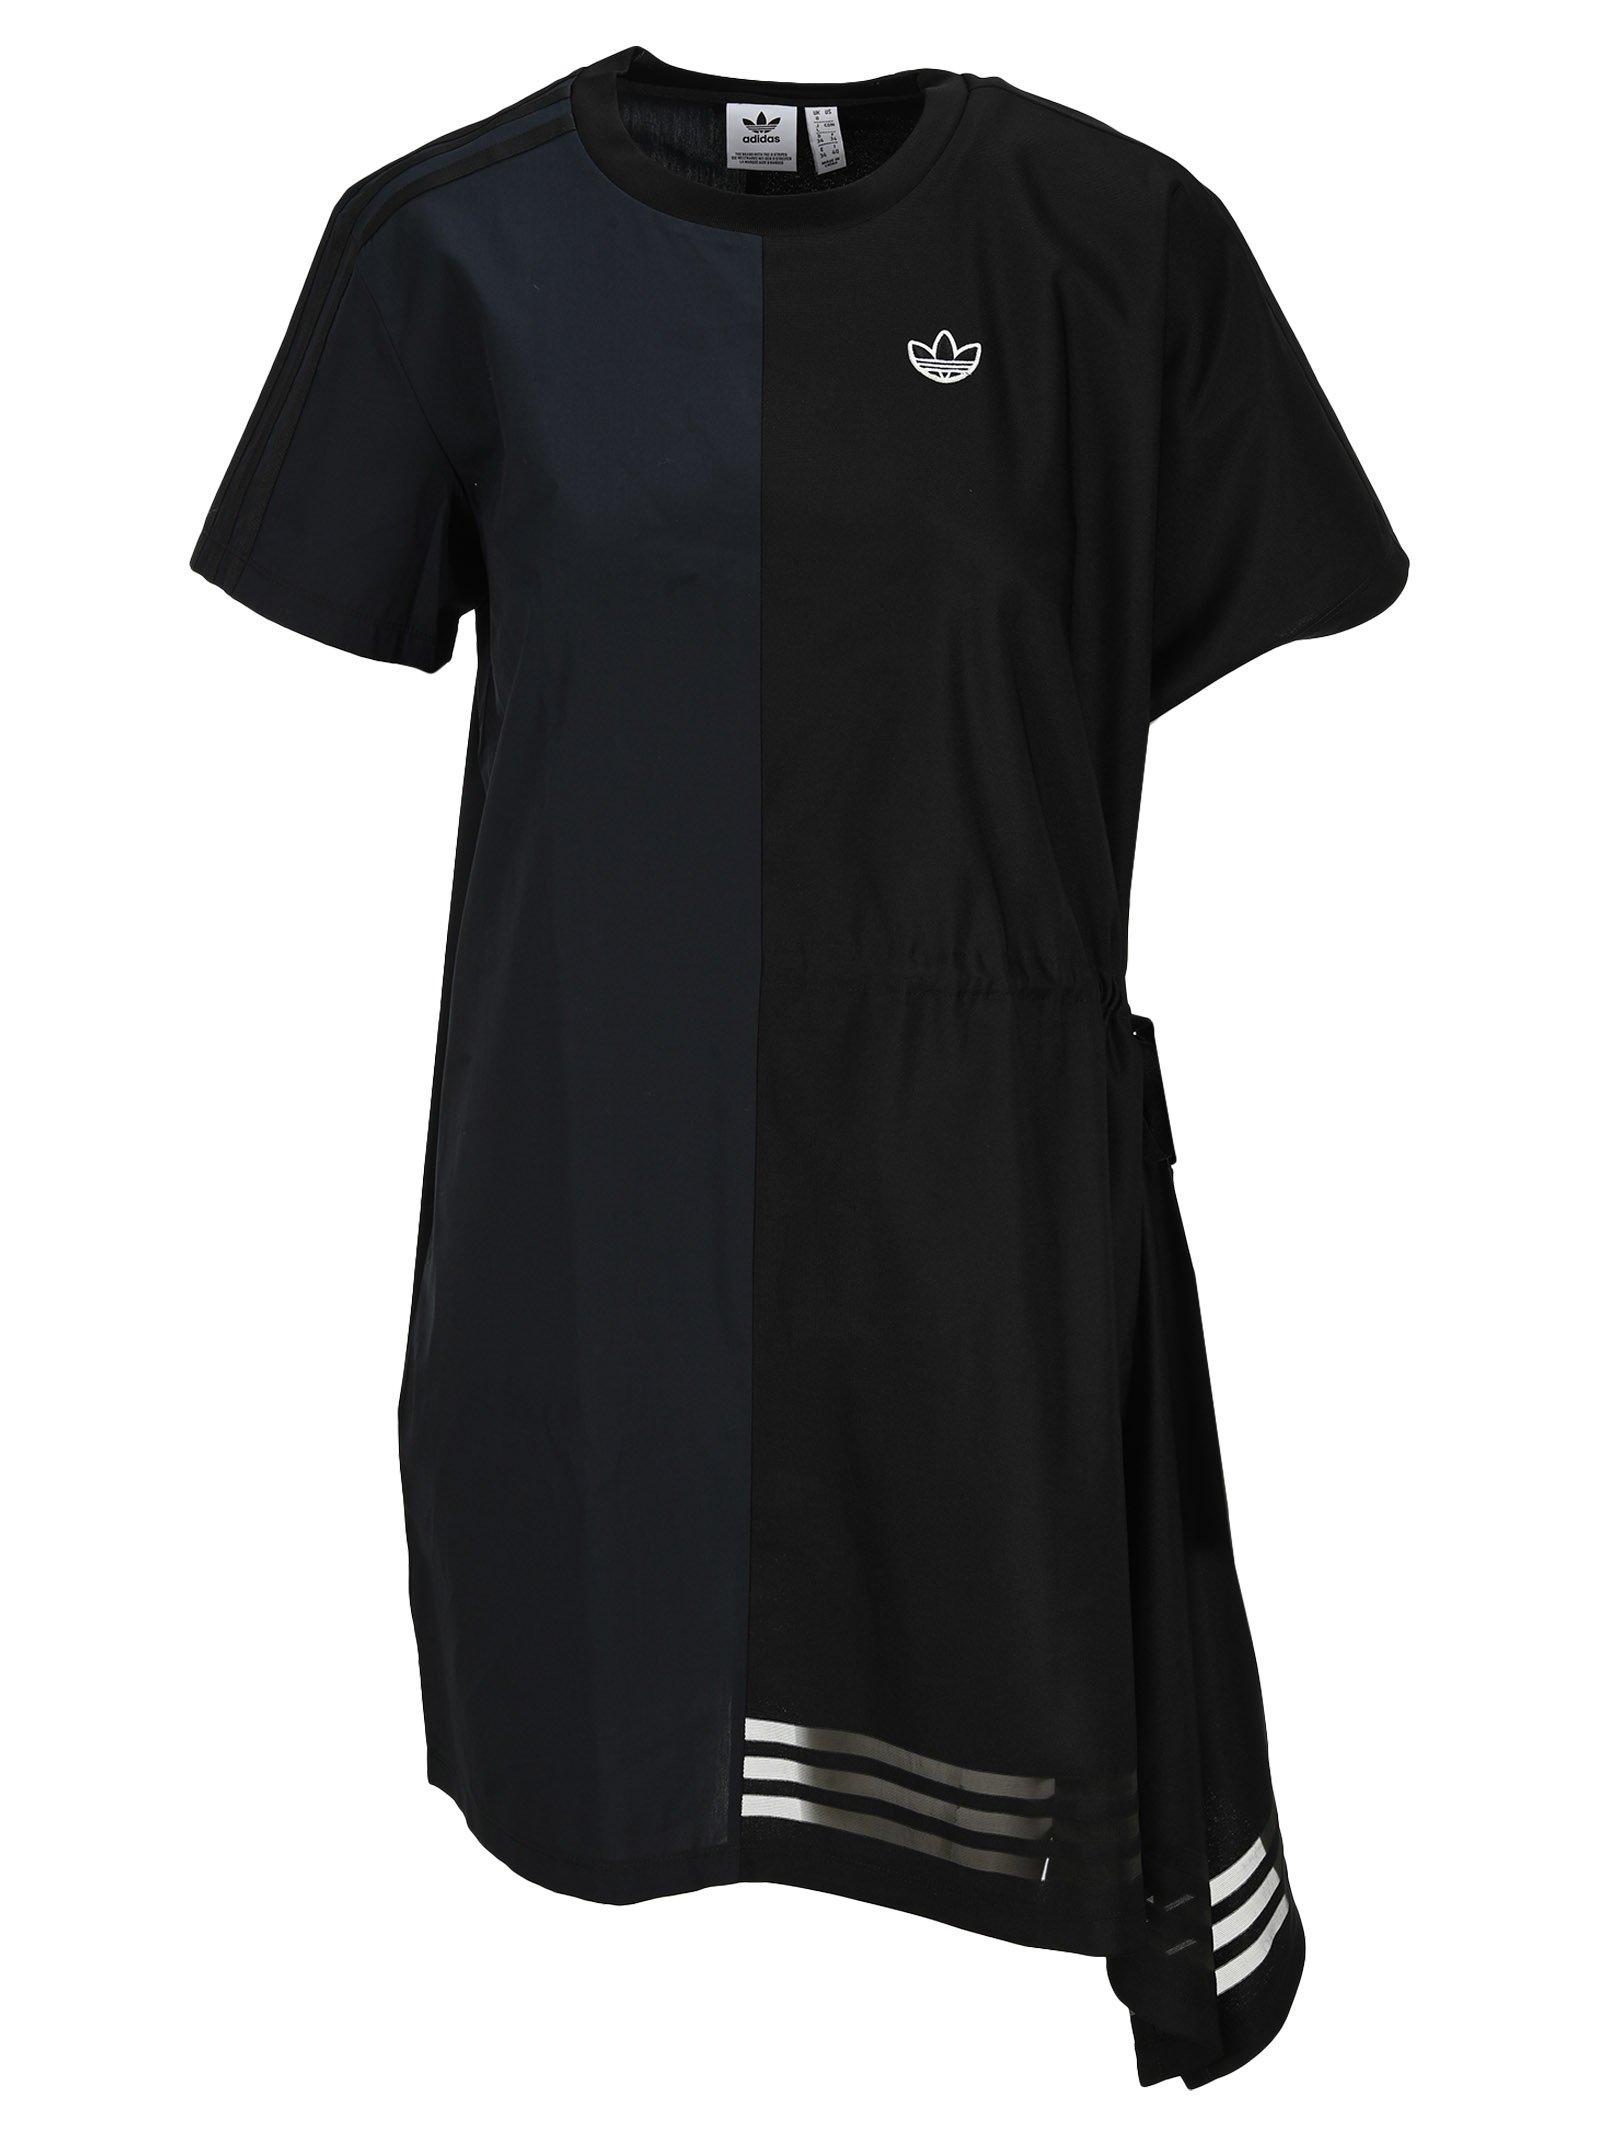 adidas Originals Synthetic Asymmetric T-shirt Dress in Black | Lyst Canada